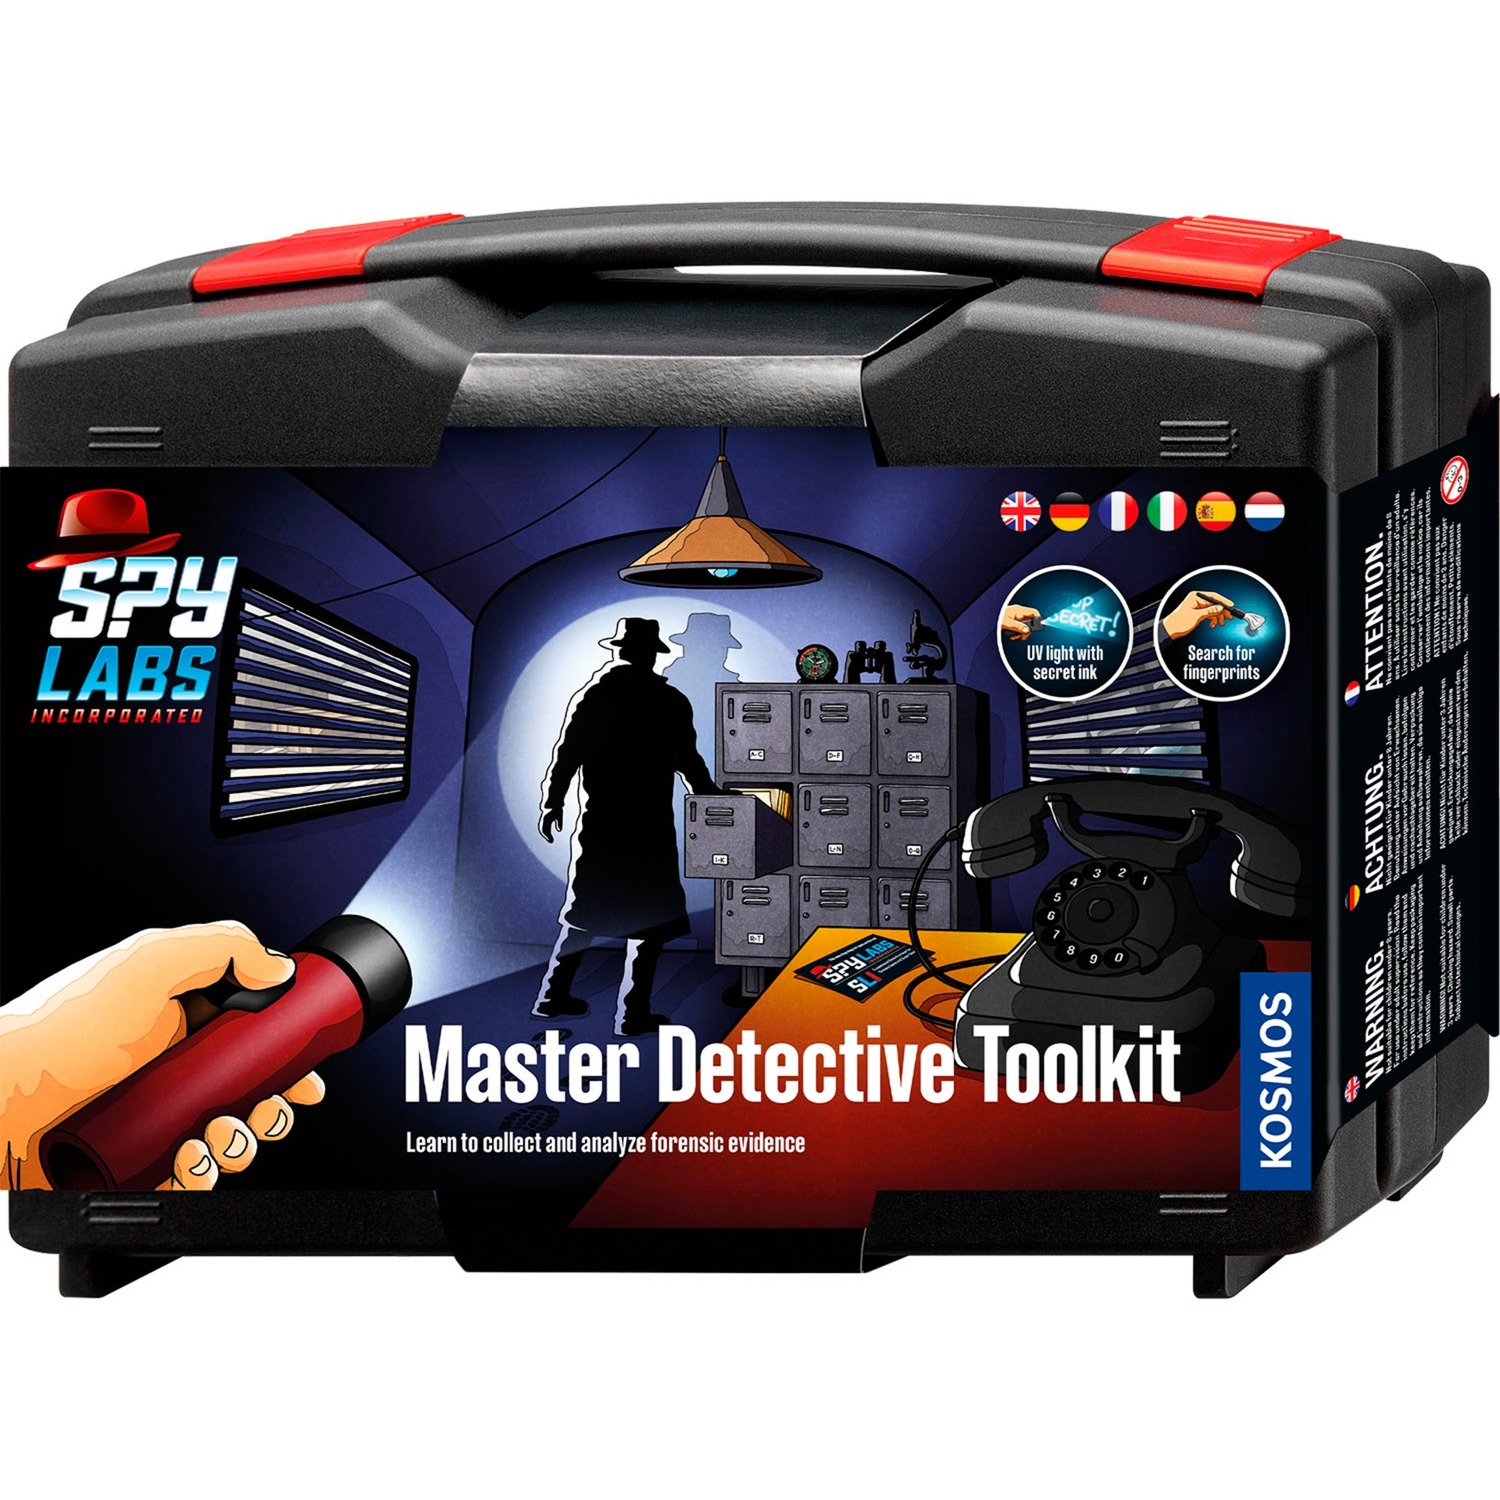 Spy Labs Incorporated Master Detective Toolkit V1, Detektiv-Sets von Kosmos